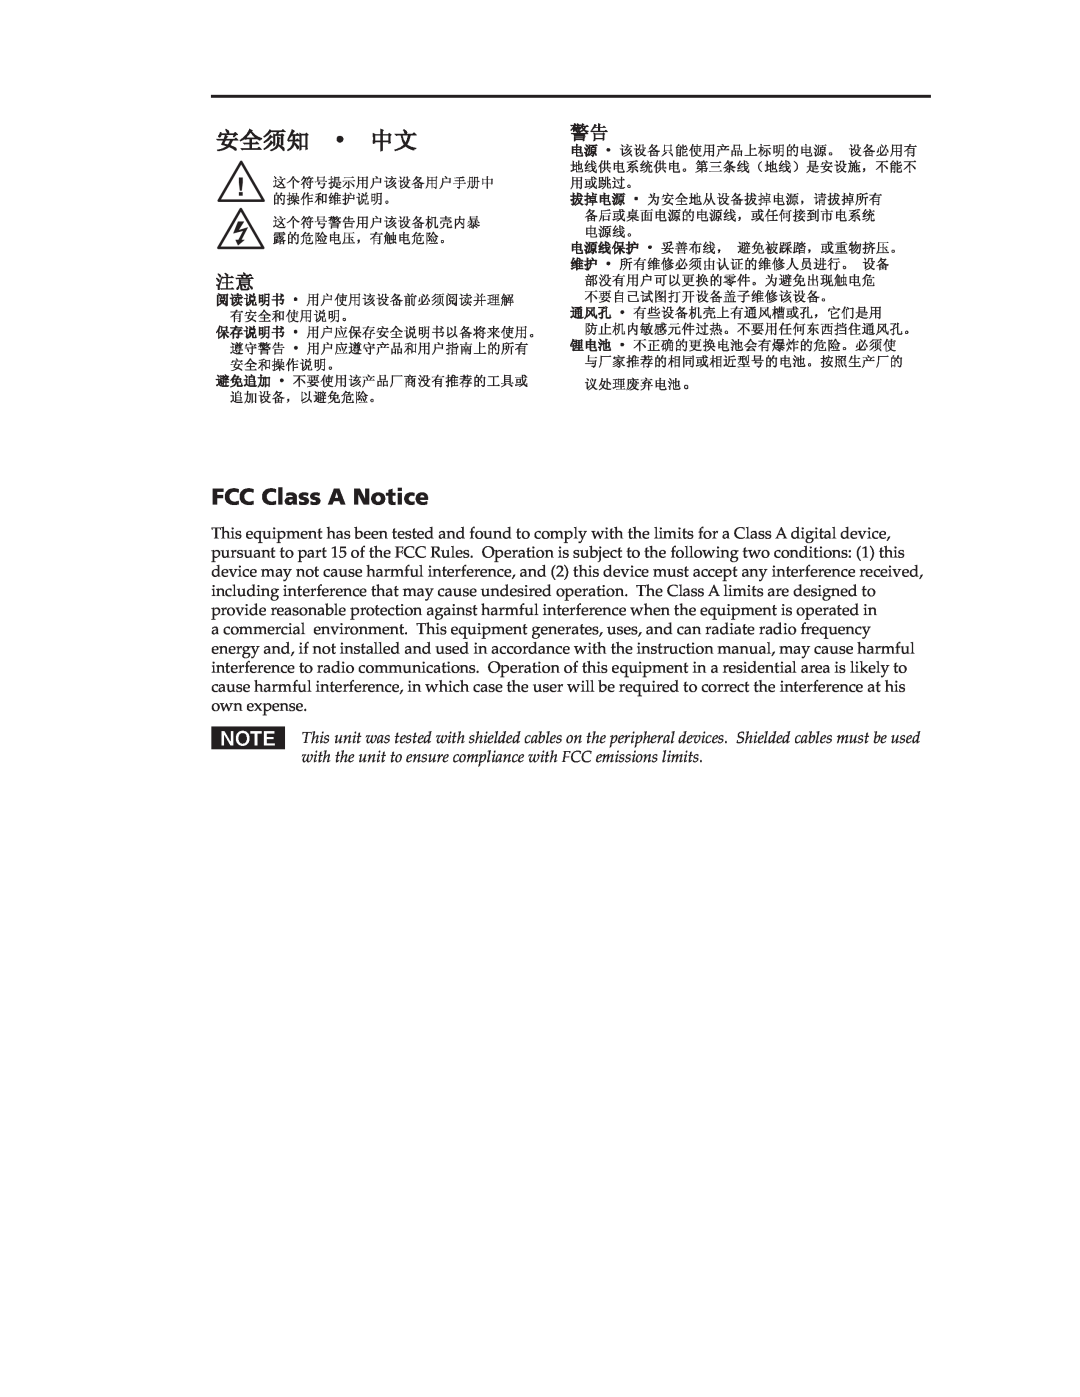 Extron electronic MP 101 user manual FCC Class A Notice 